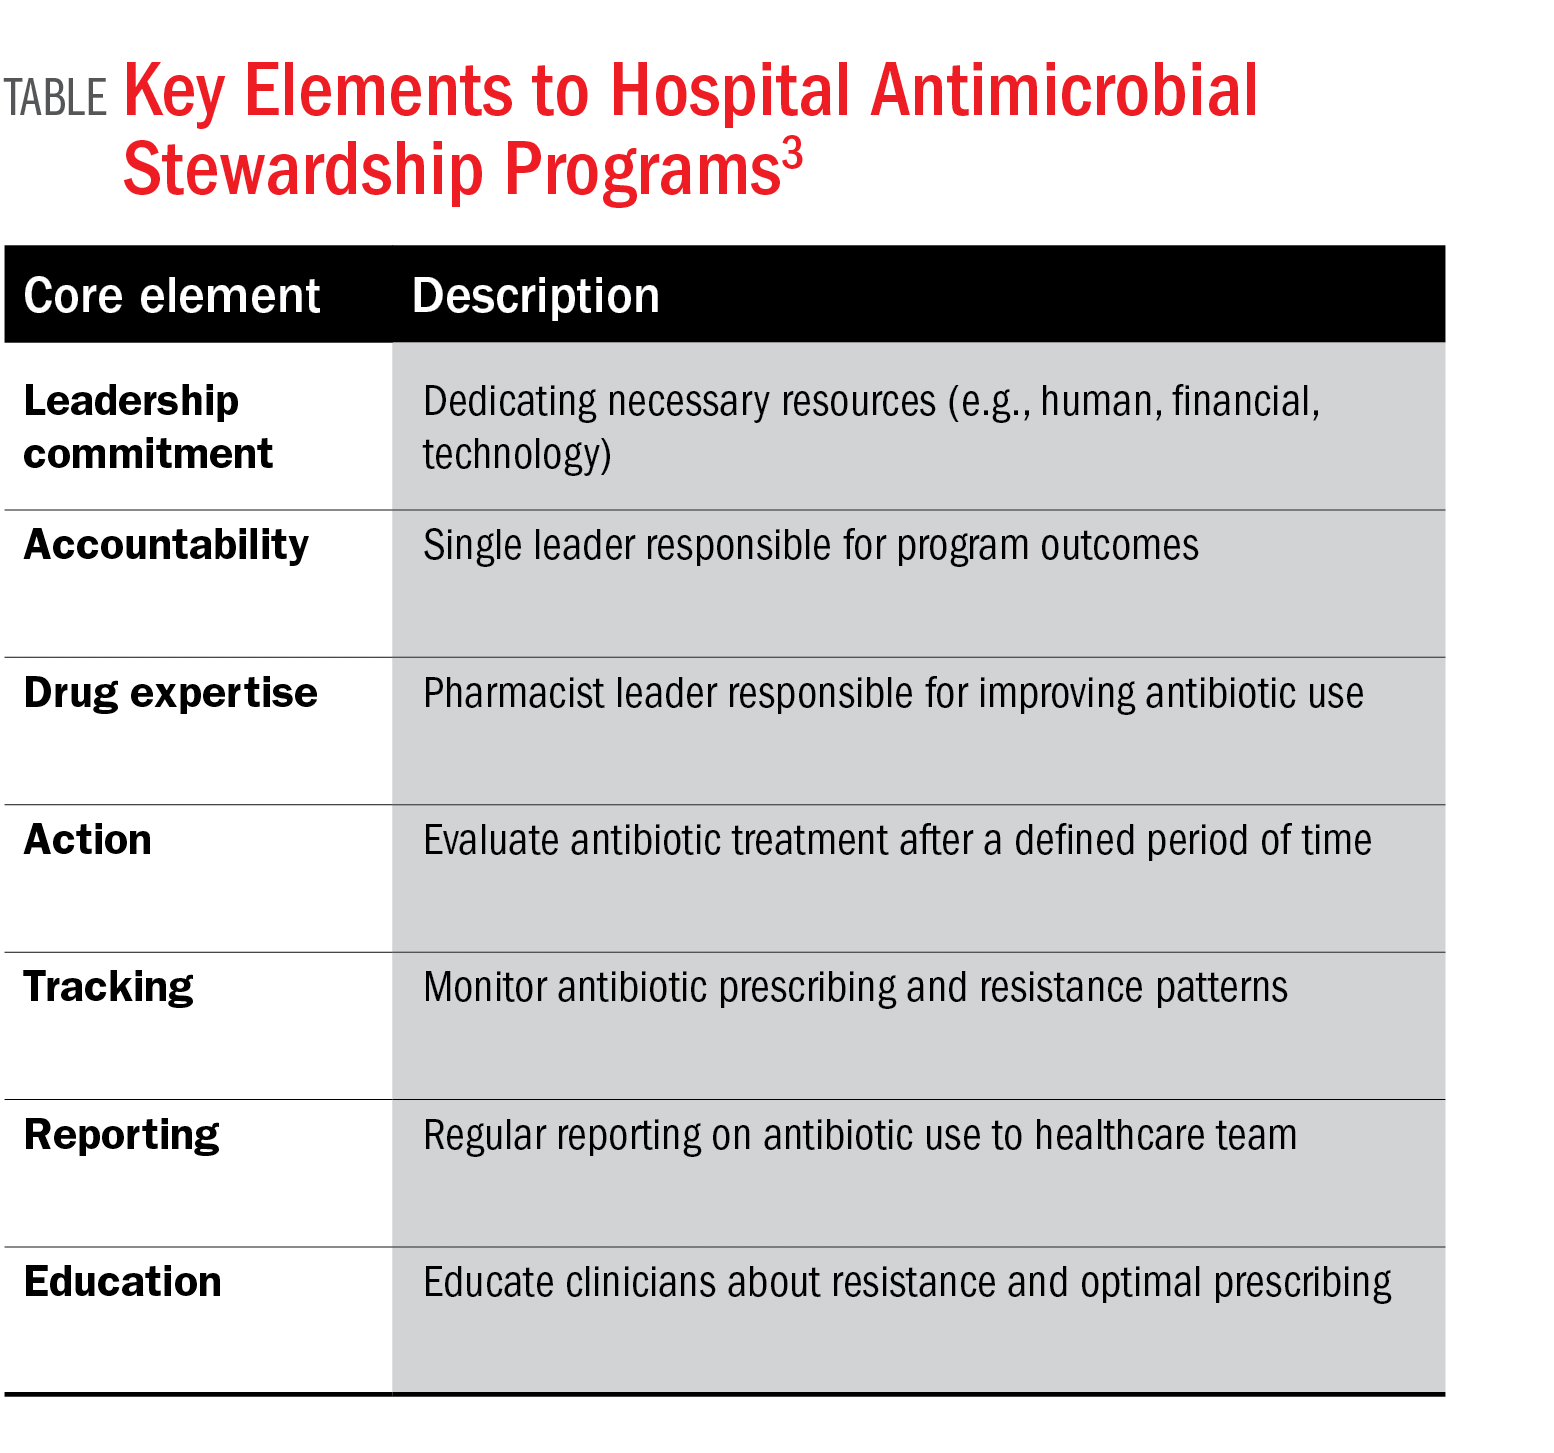 Key Elements to Hospital Antimicrobial Stewardship Programs